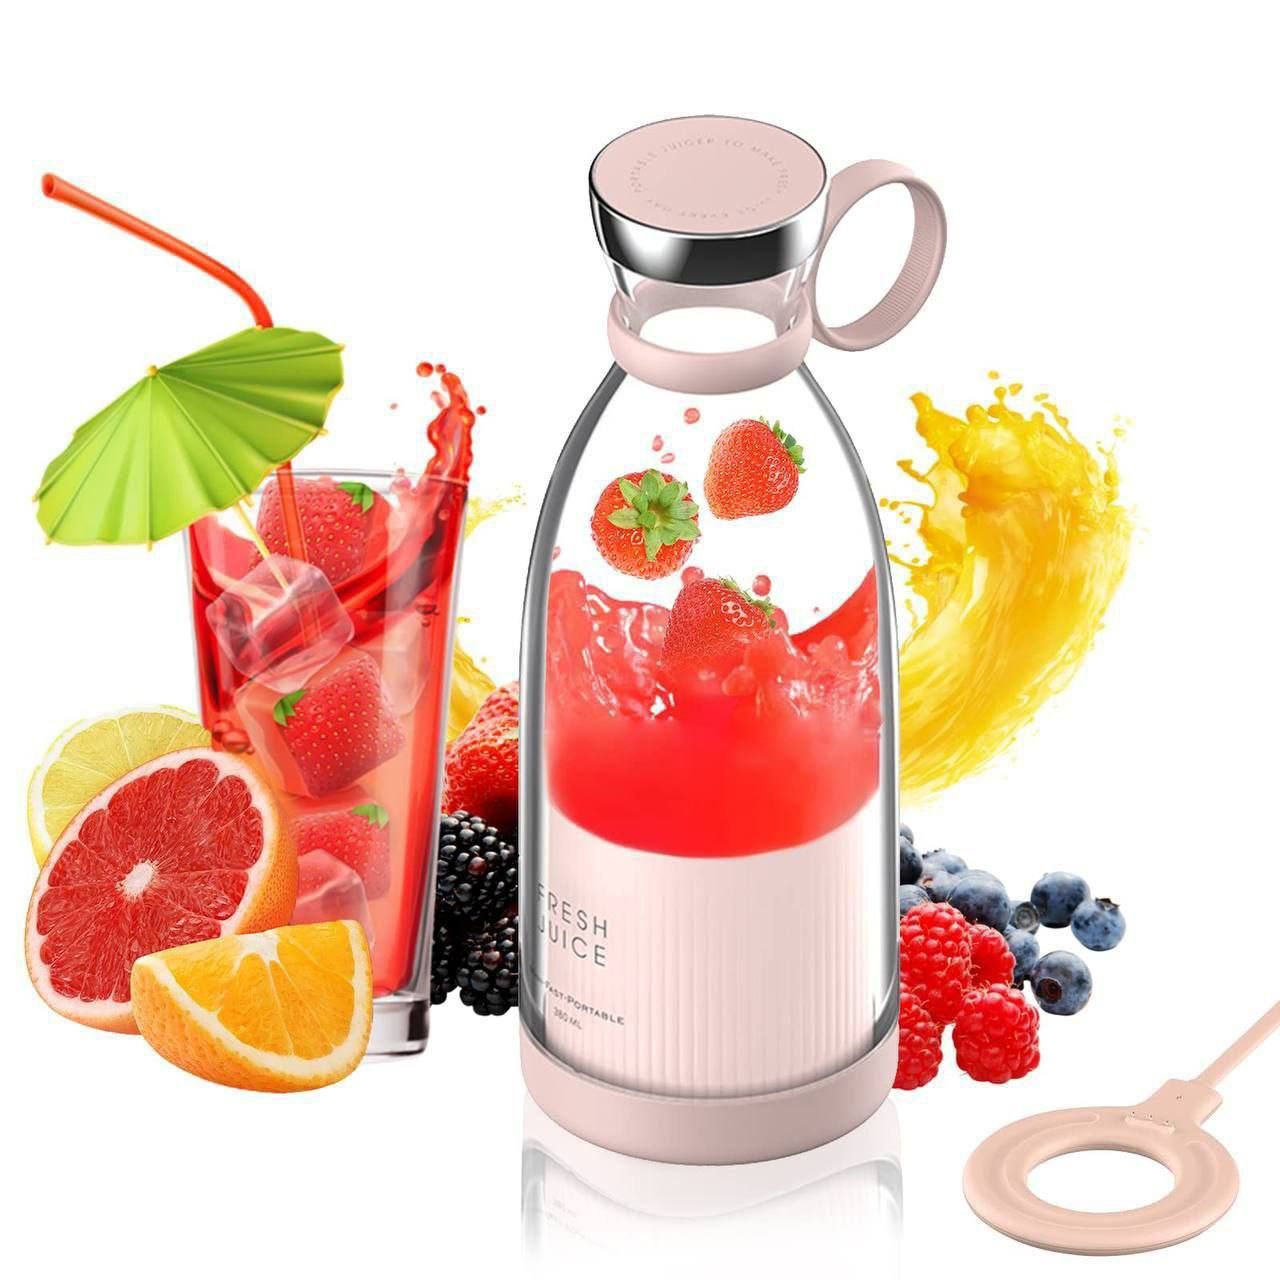 Simsiz blender fresh juice